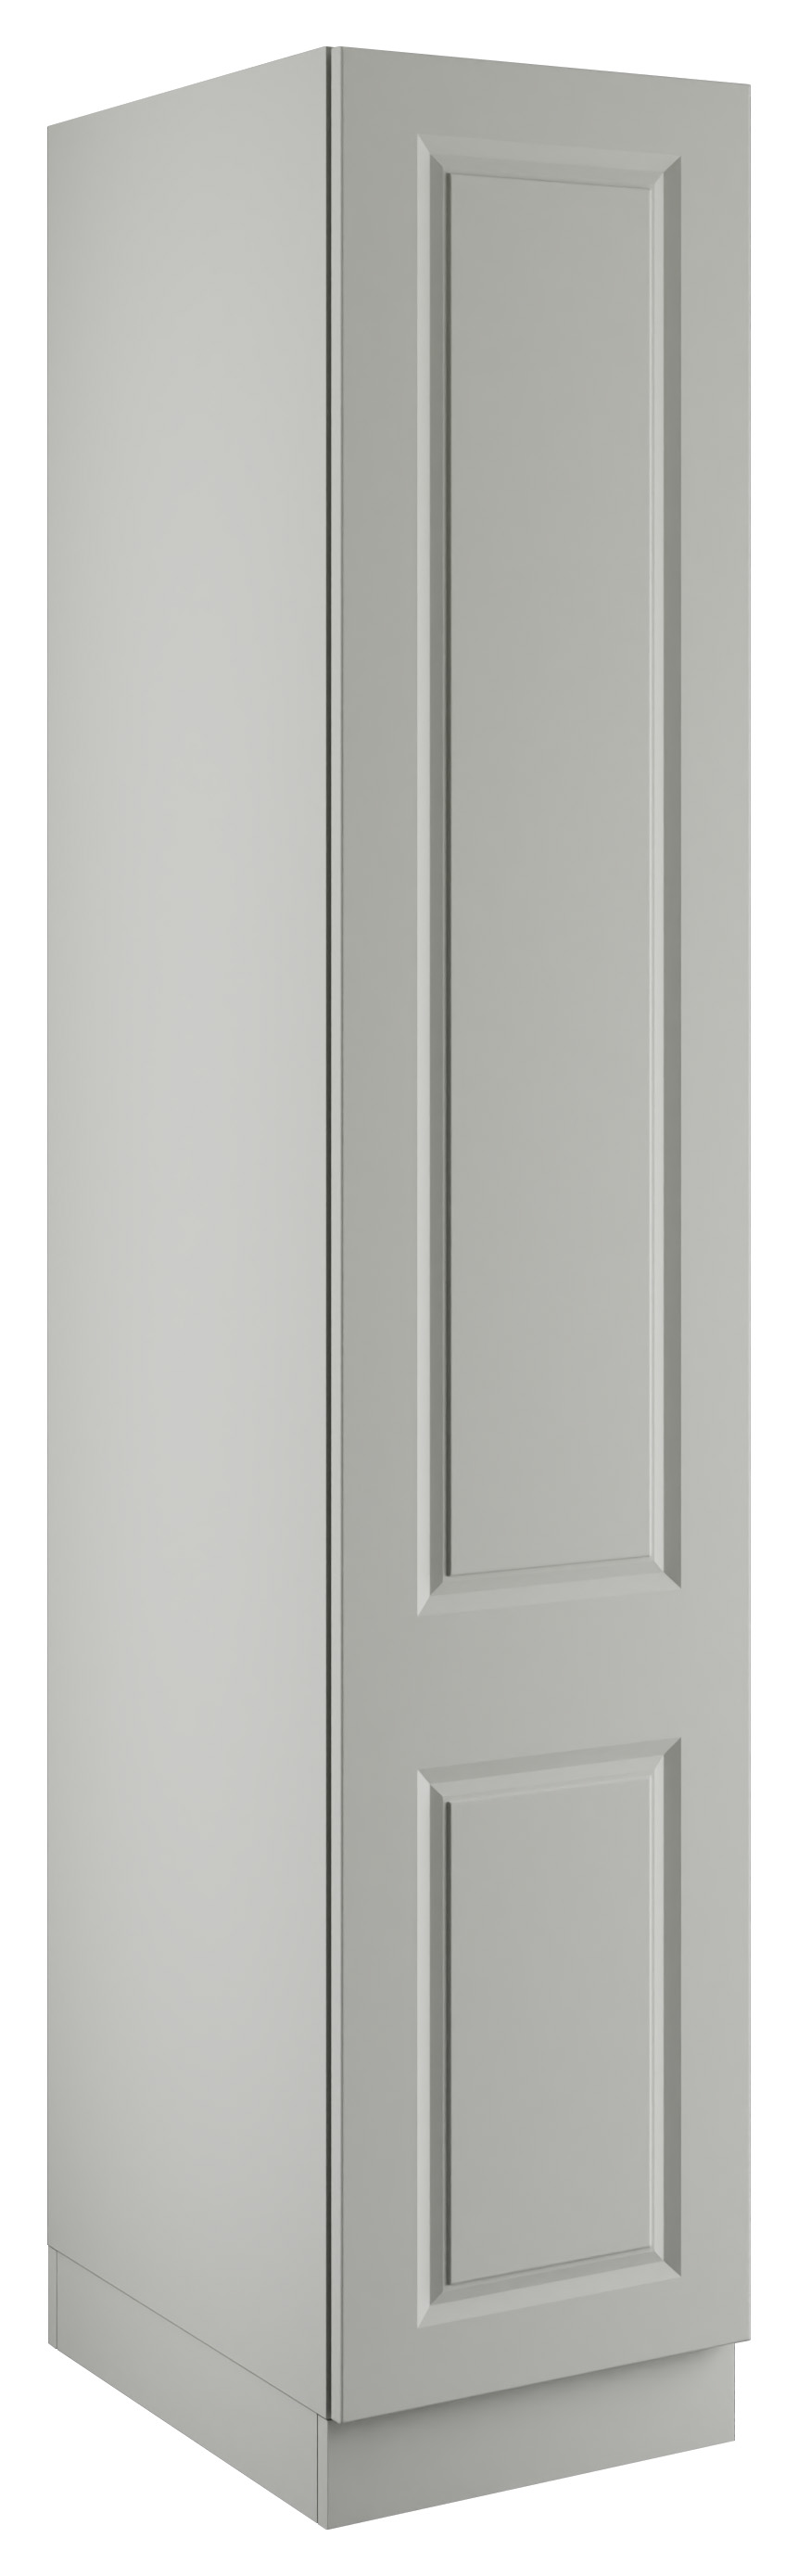 Harrogate Light Grey Single Wardrobe with Single Rail - 450 x 2260 x 608mm